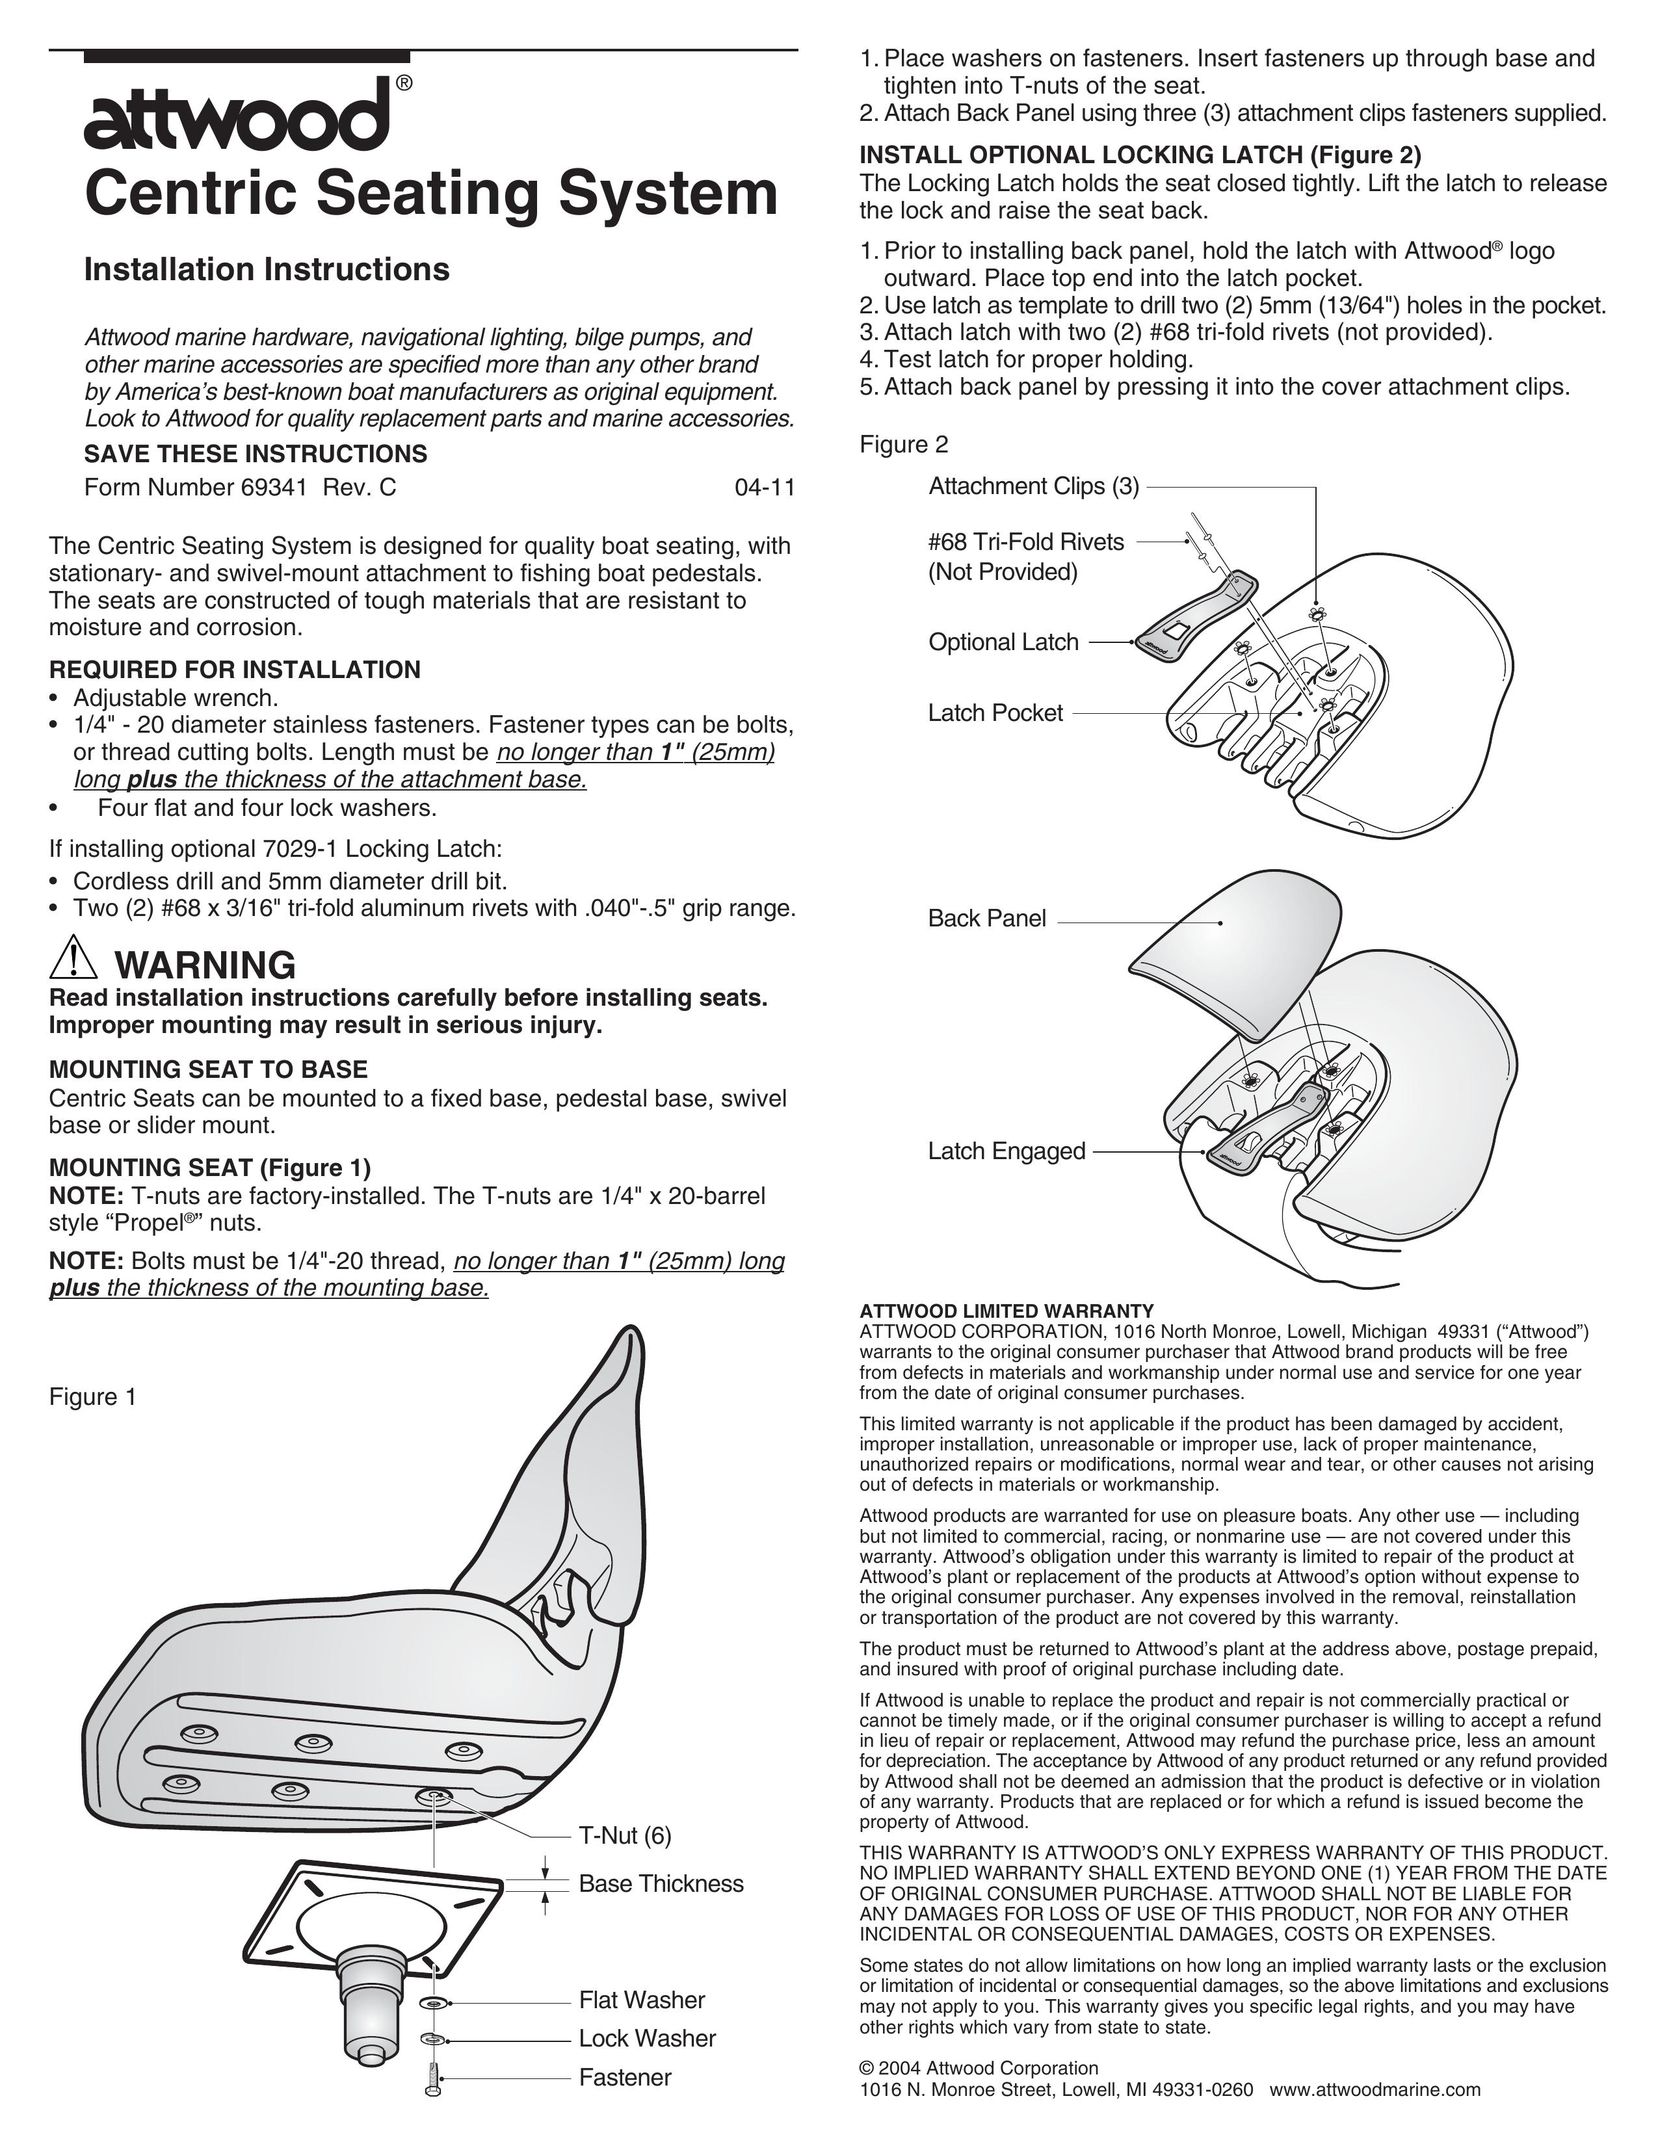 Attwood Centric 2 Car Seat User Manual